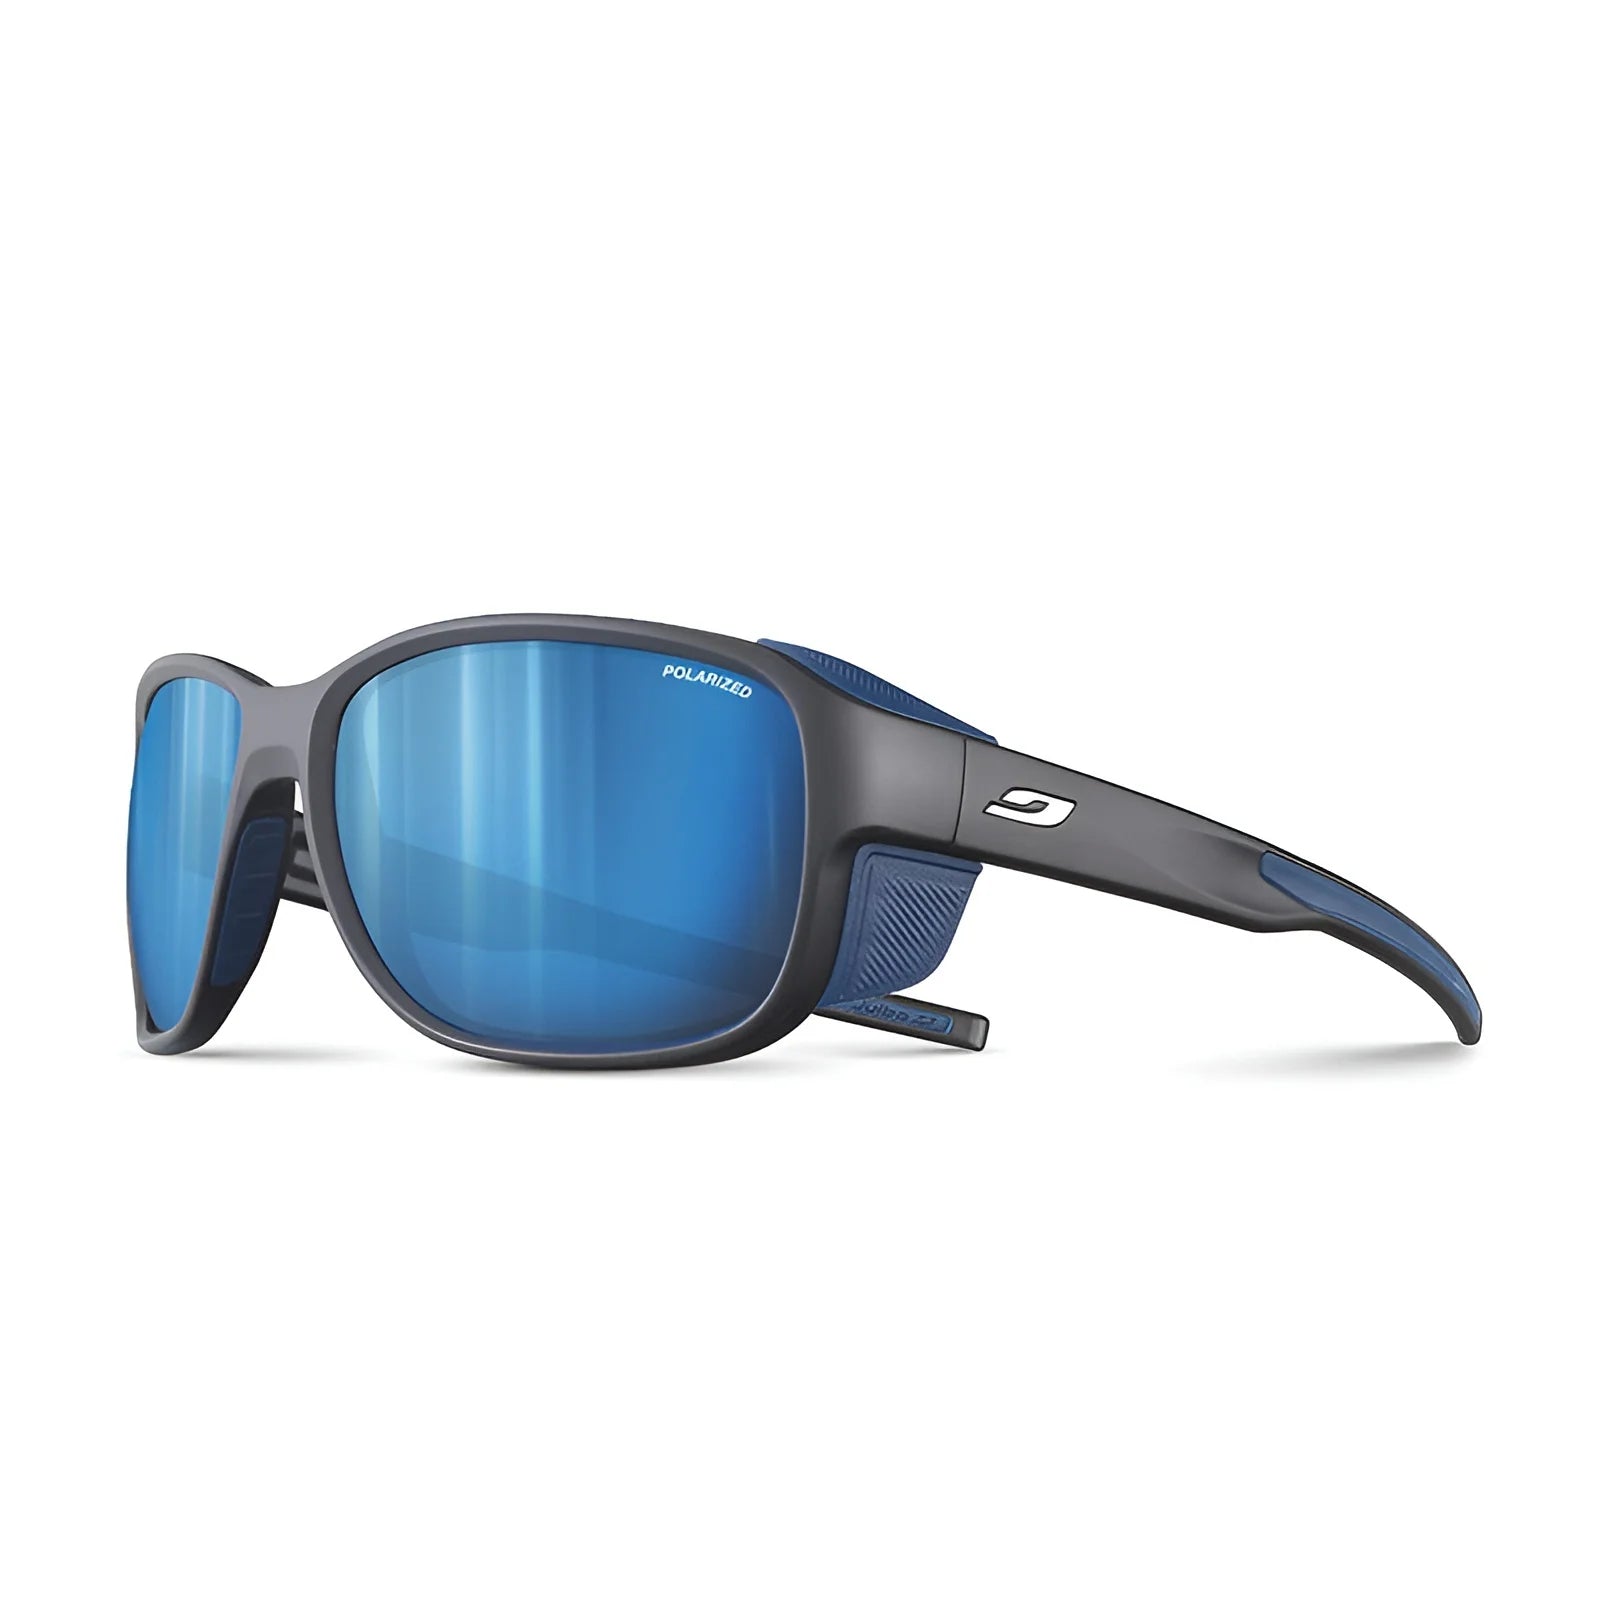 Julbo Montebianco 2 Sunglasses Black / Blue / White / Spectron 3 Polarized (VLT 12%)